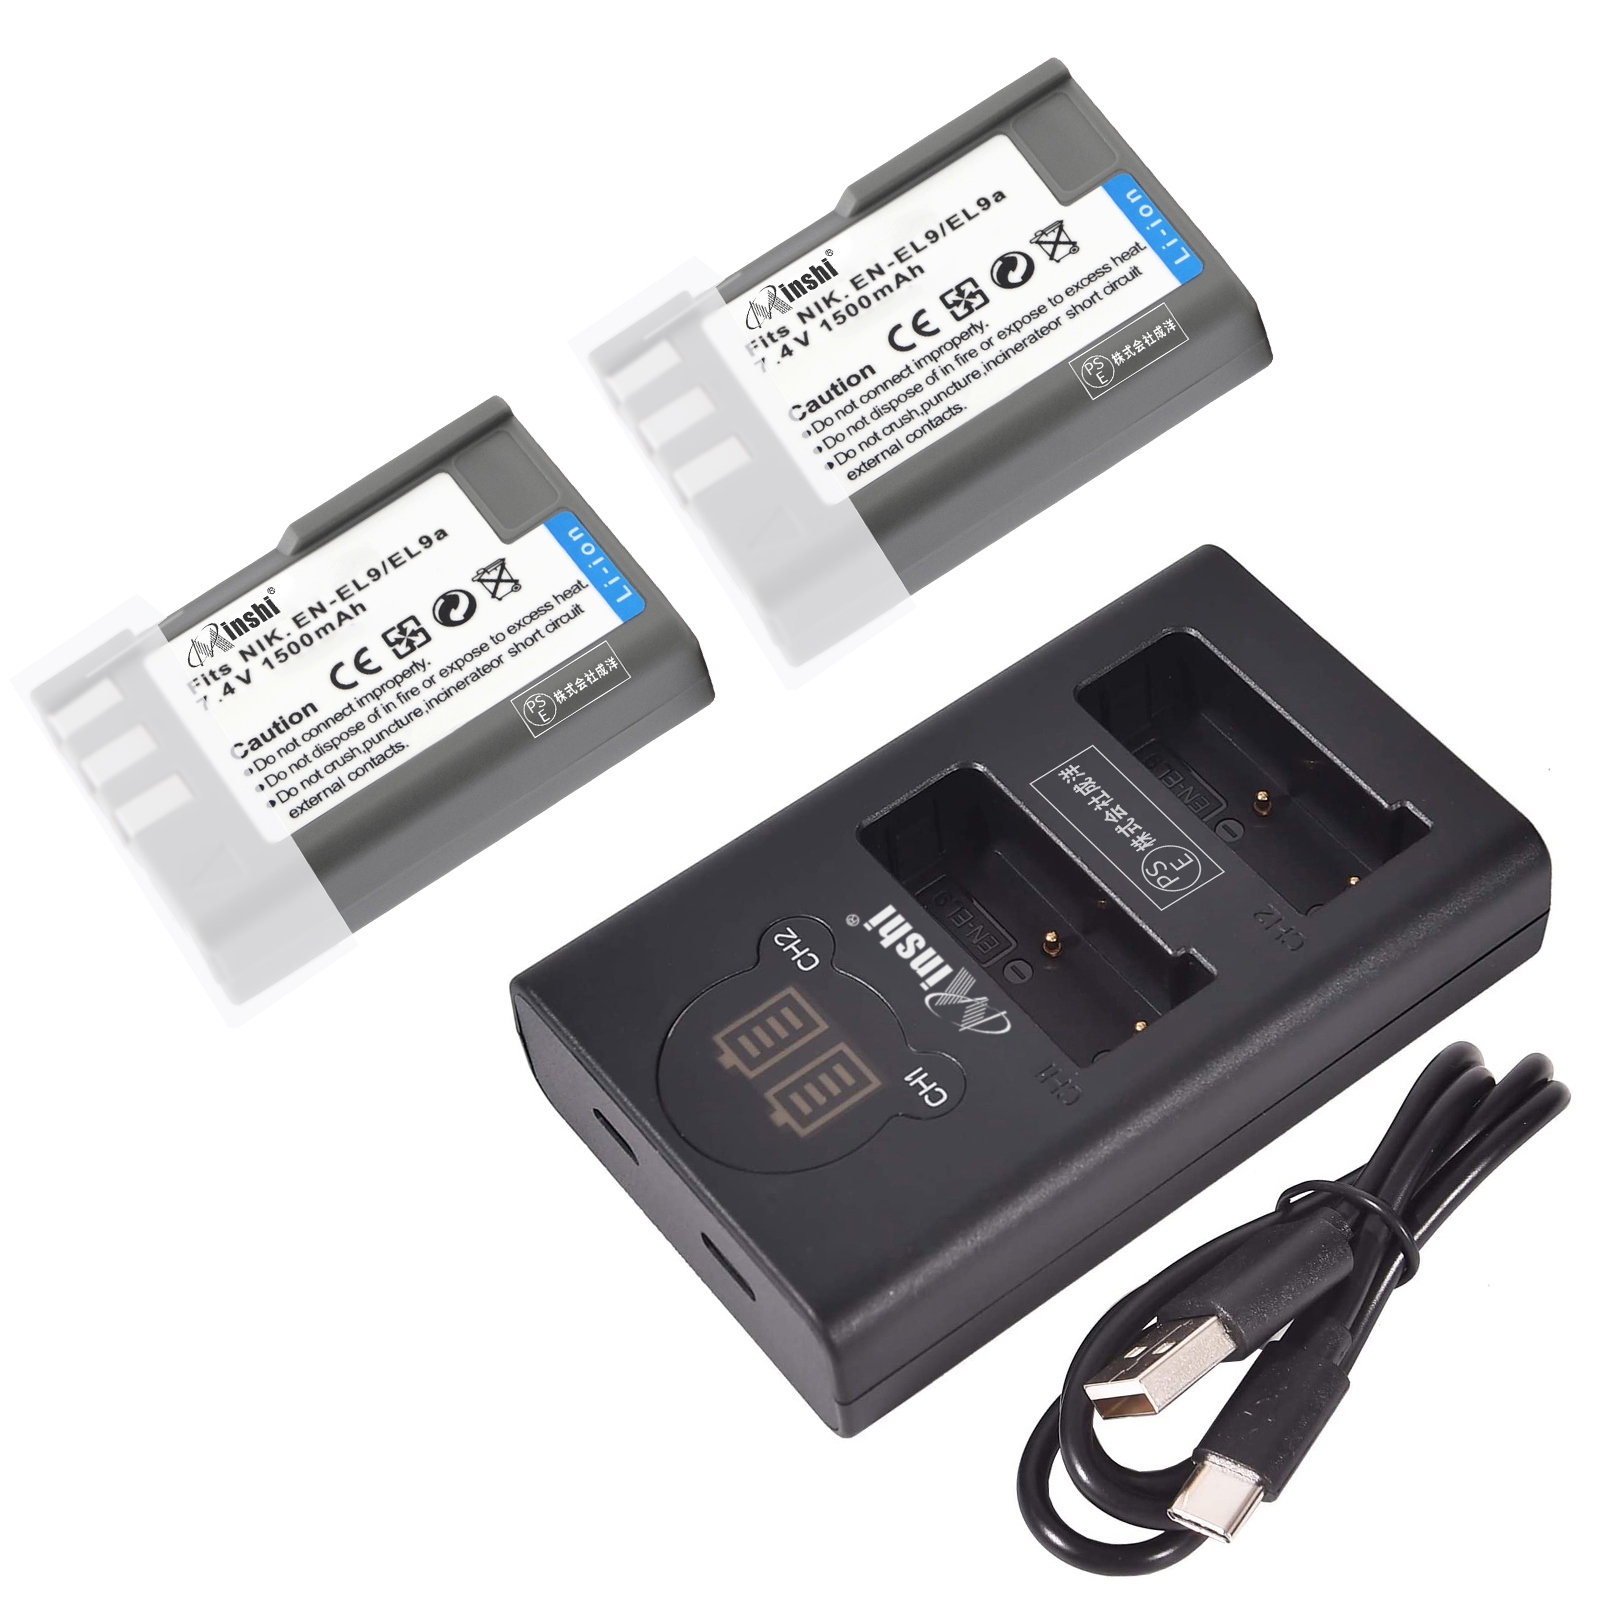 【２個セット】 minshi NIKON D60 【互換急速USBチャージャー】 1500mAh PSE認定済 高品質EN-EL9 EN-EL9a EN-EL9e互換バッテリーPHB